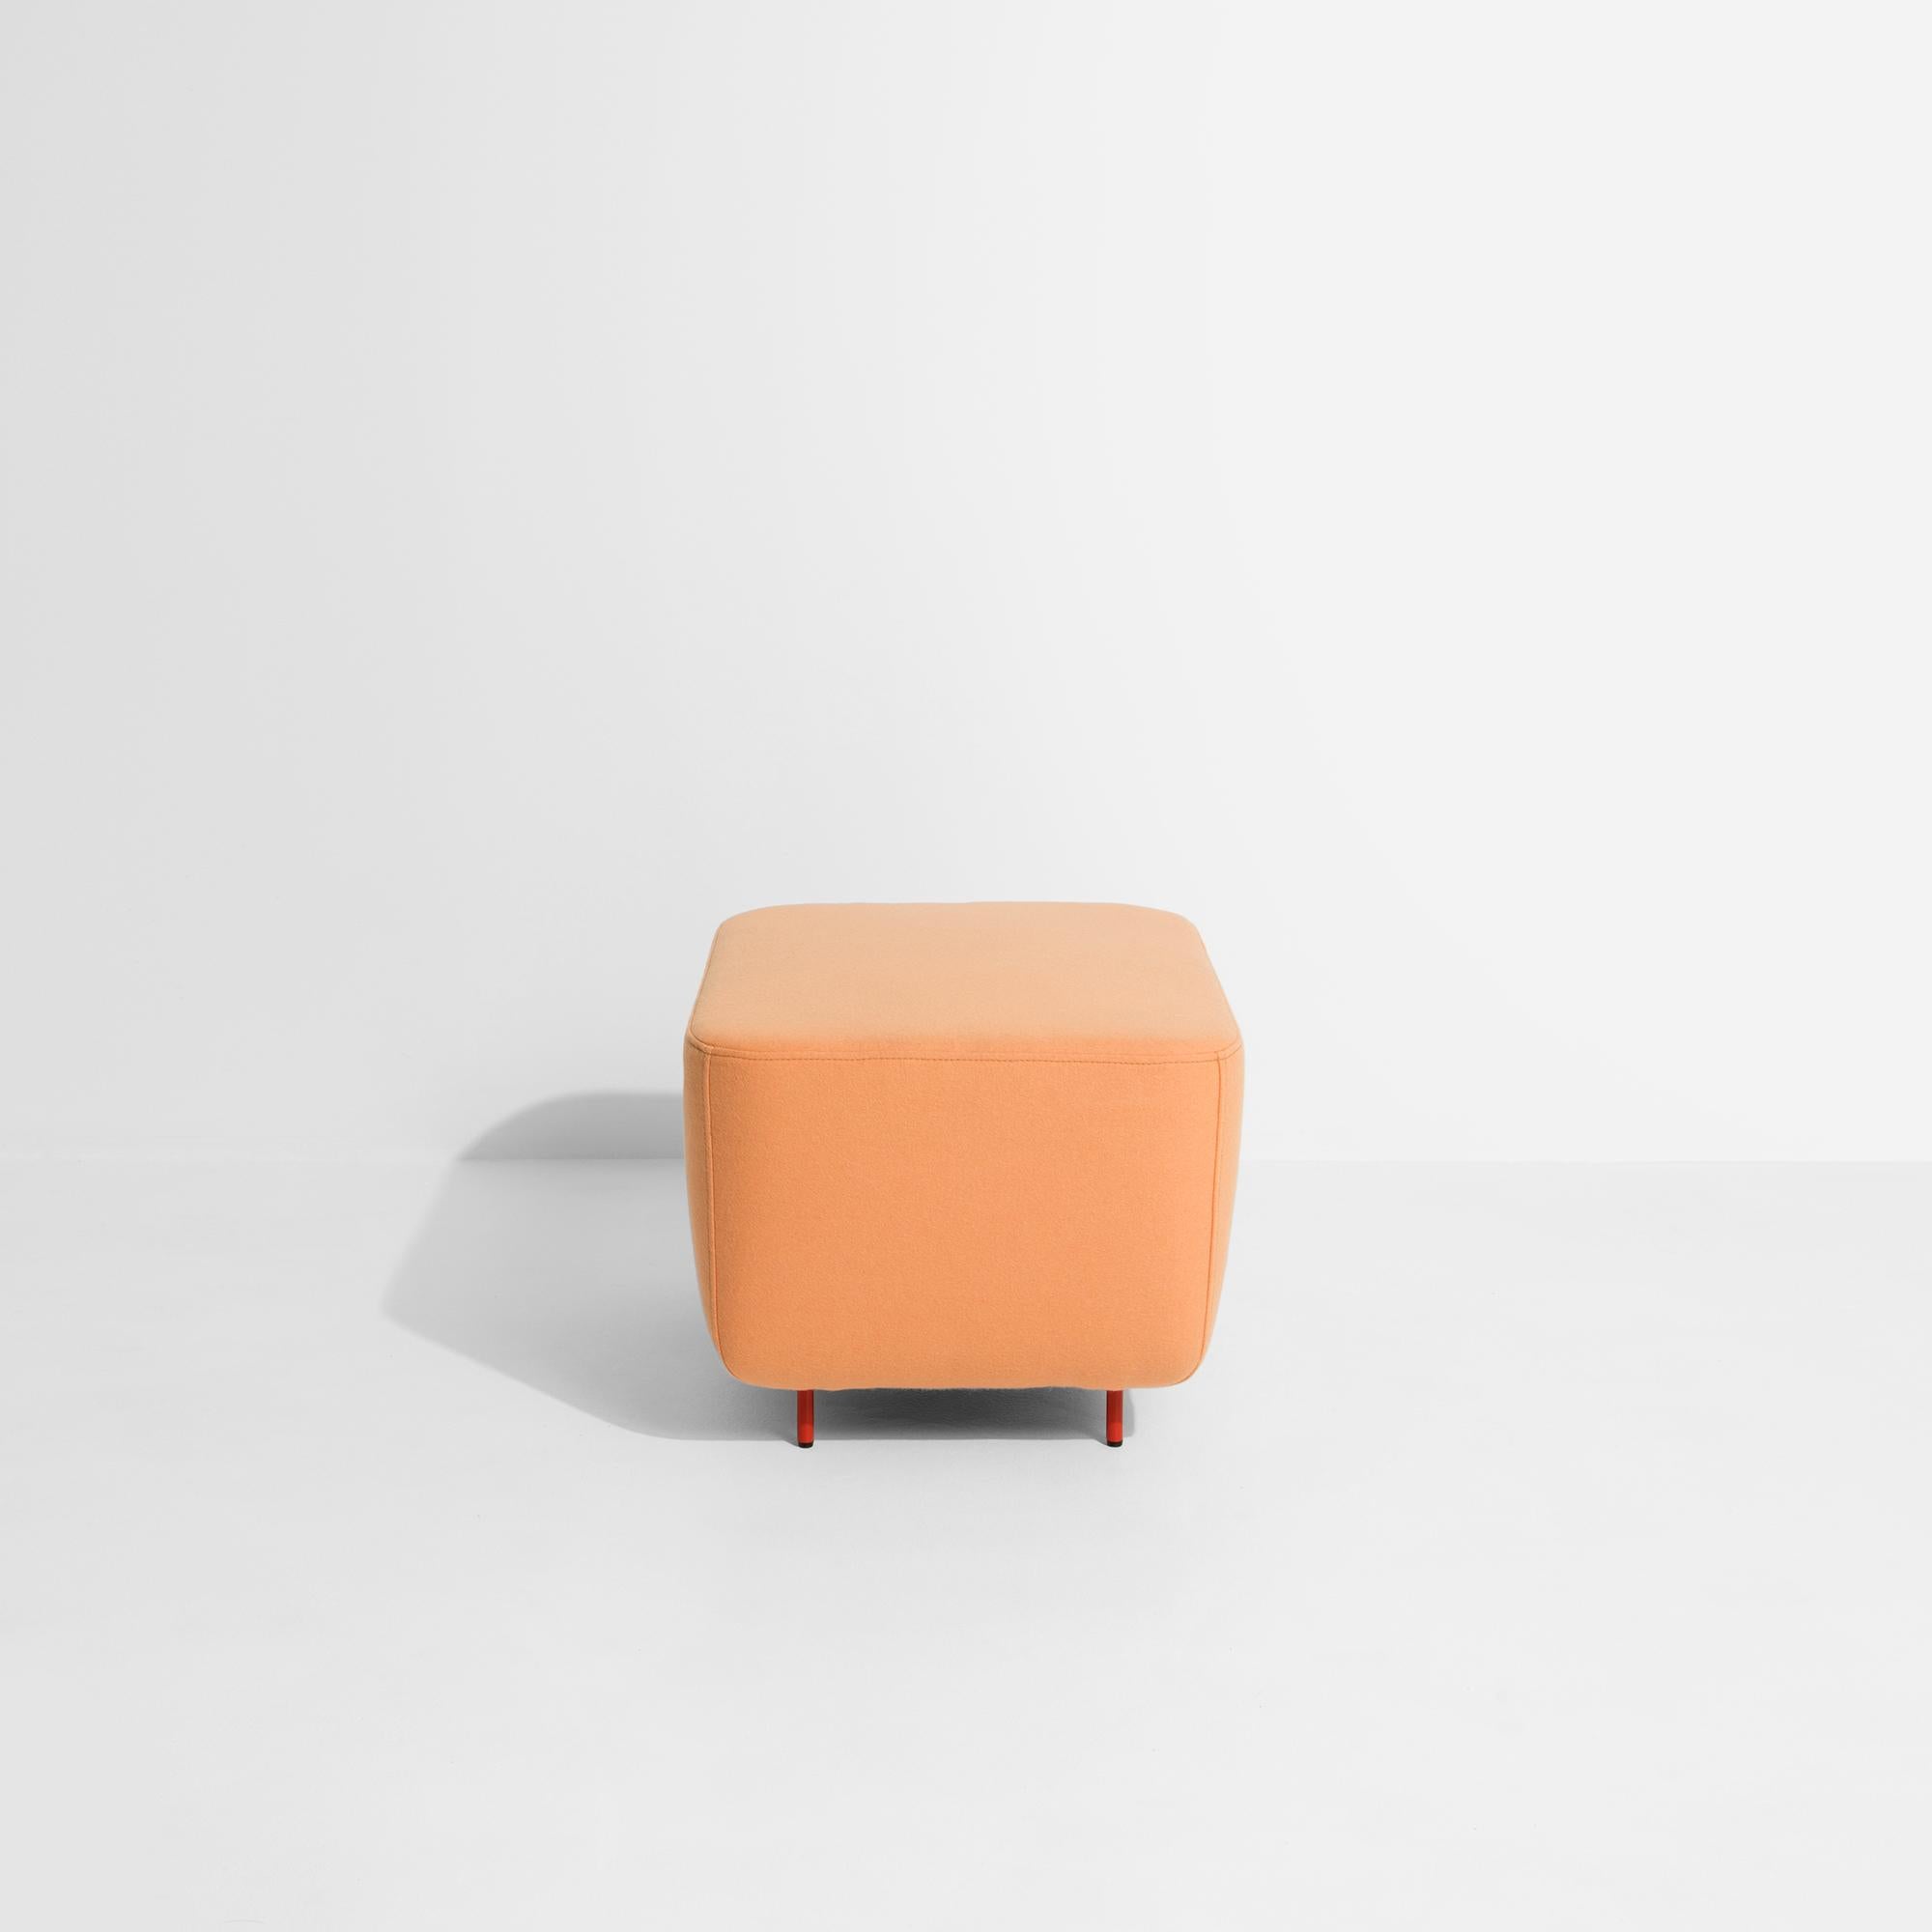 Petite Friture Small Hoff Stool in Orange by Morten & Jonas, 2015 For Sale 1